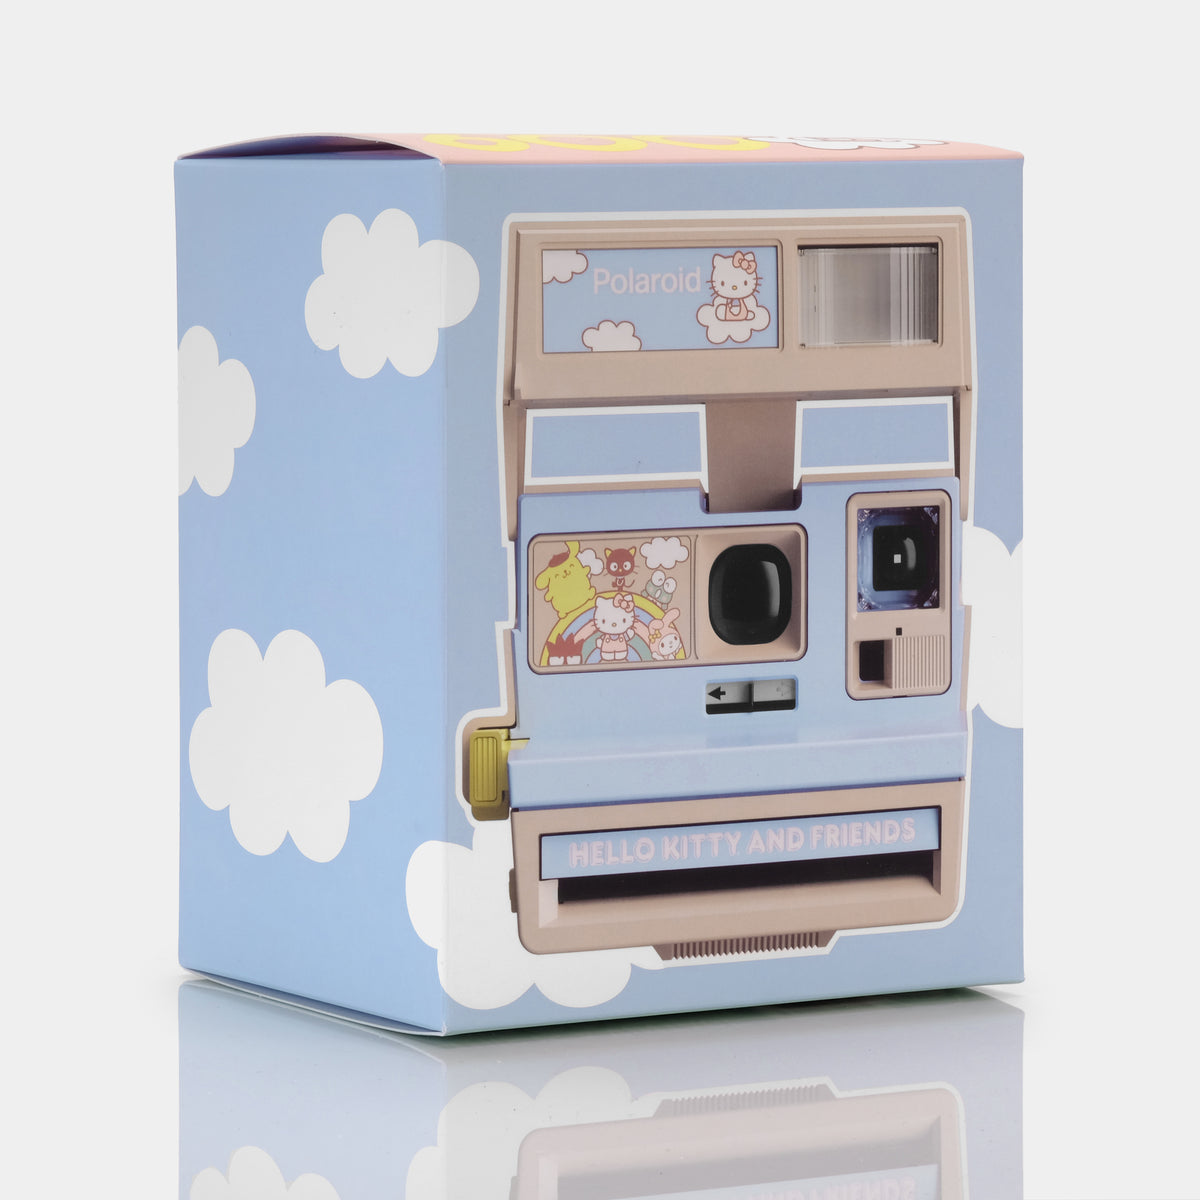 Hello Kitty and Friends x Polaroid 600 Instant Film Camera Toys&amp;Games RETROSPEKT   